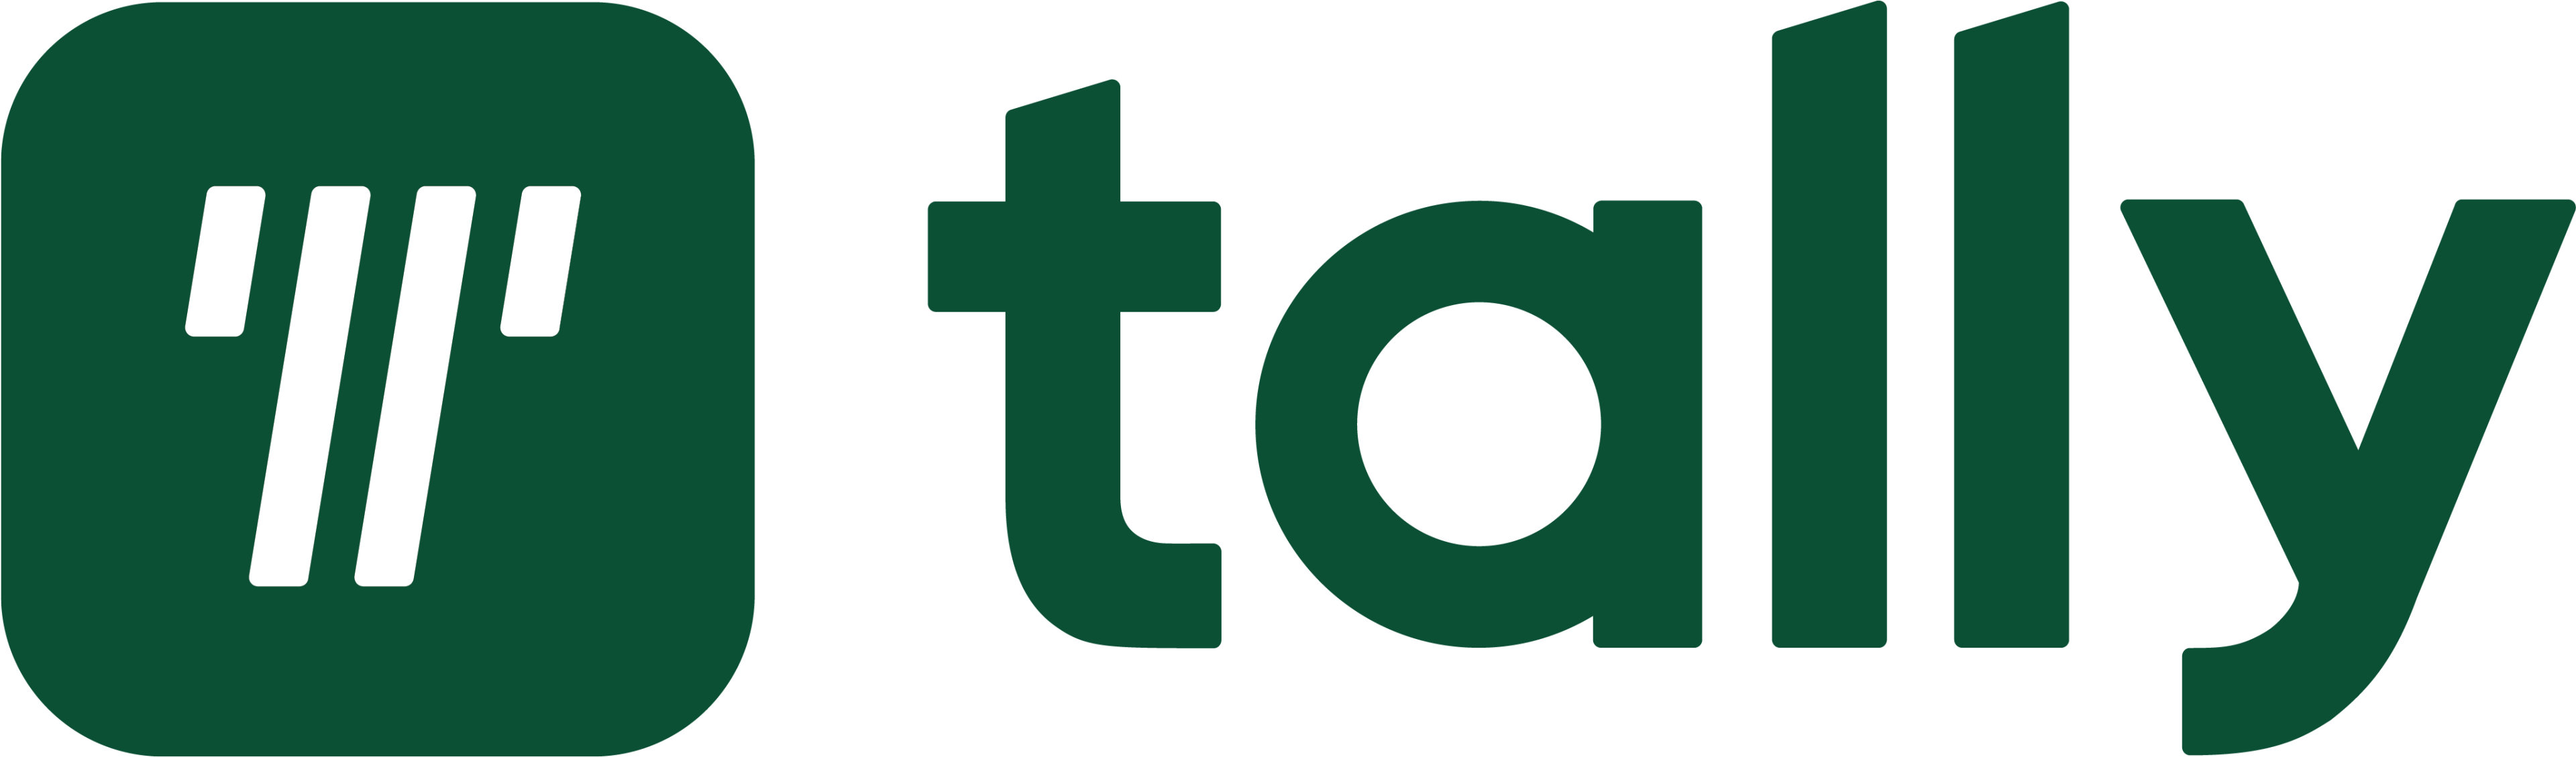 Tally Green Logo Full